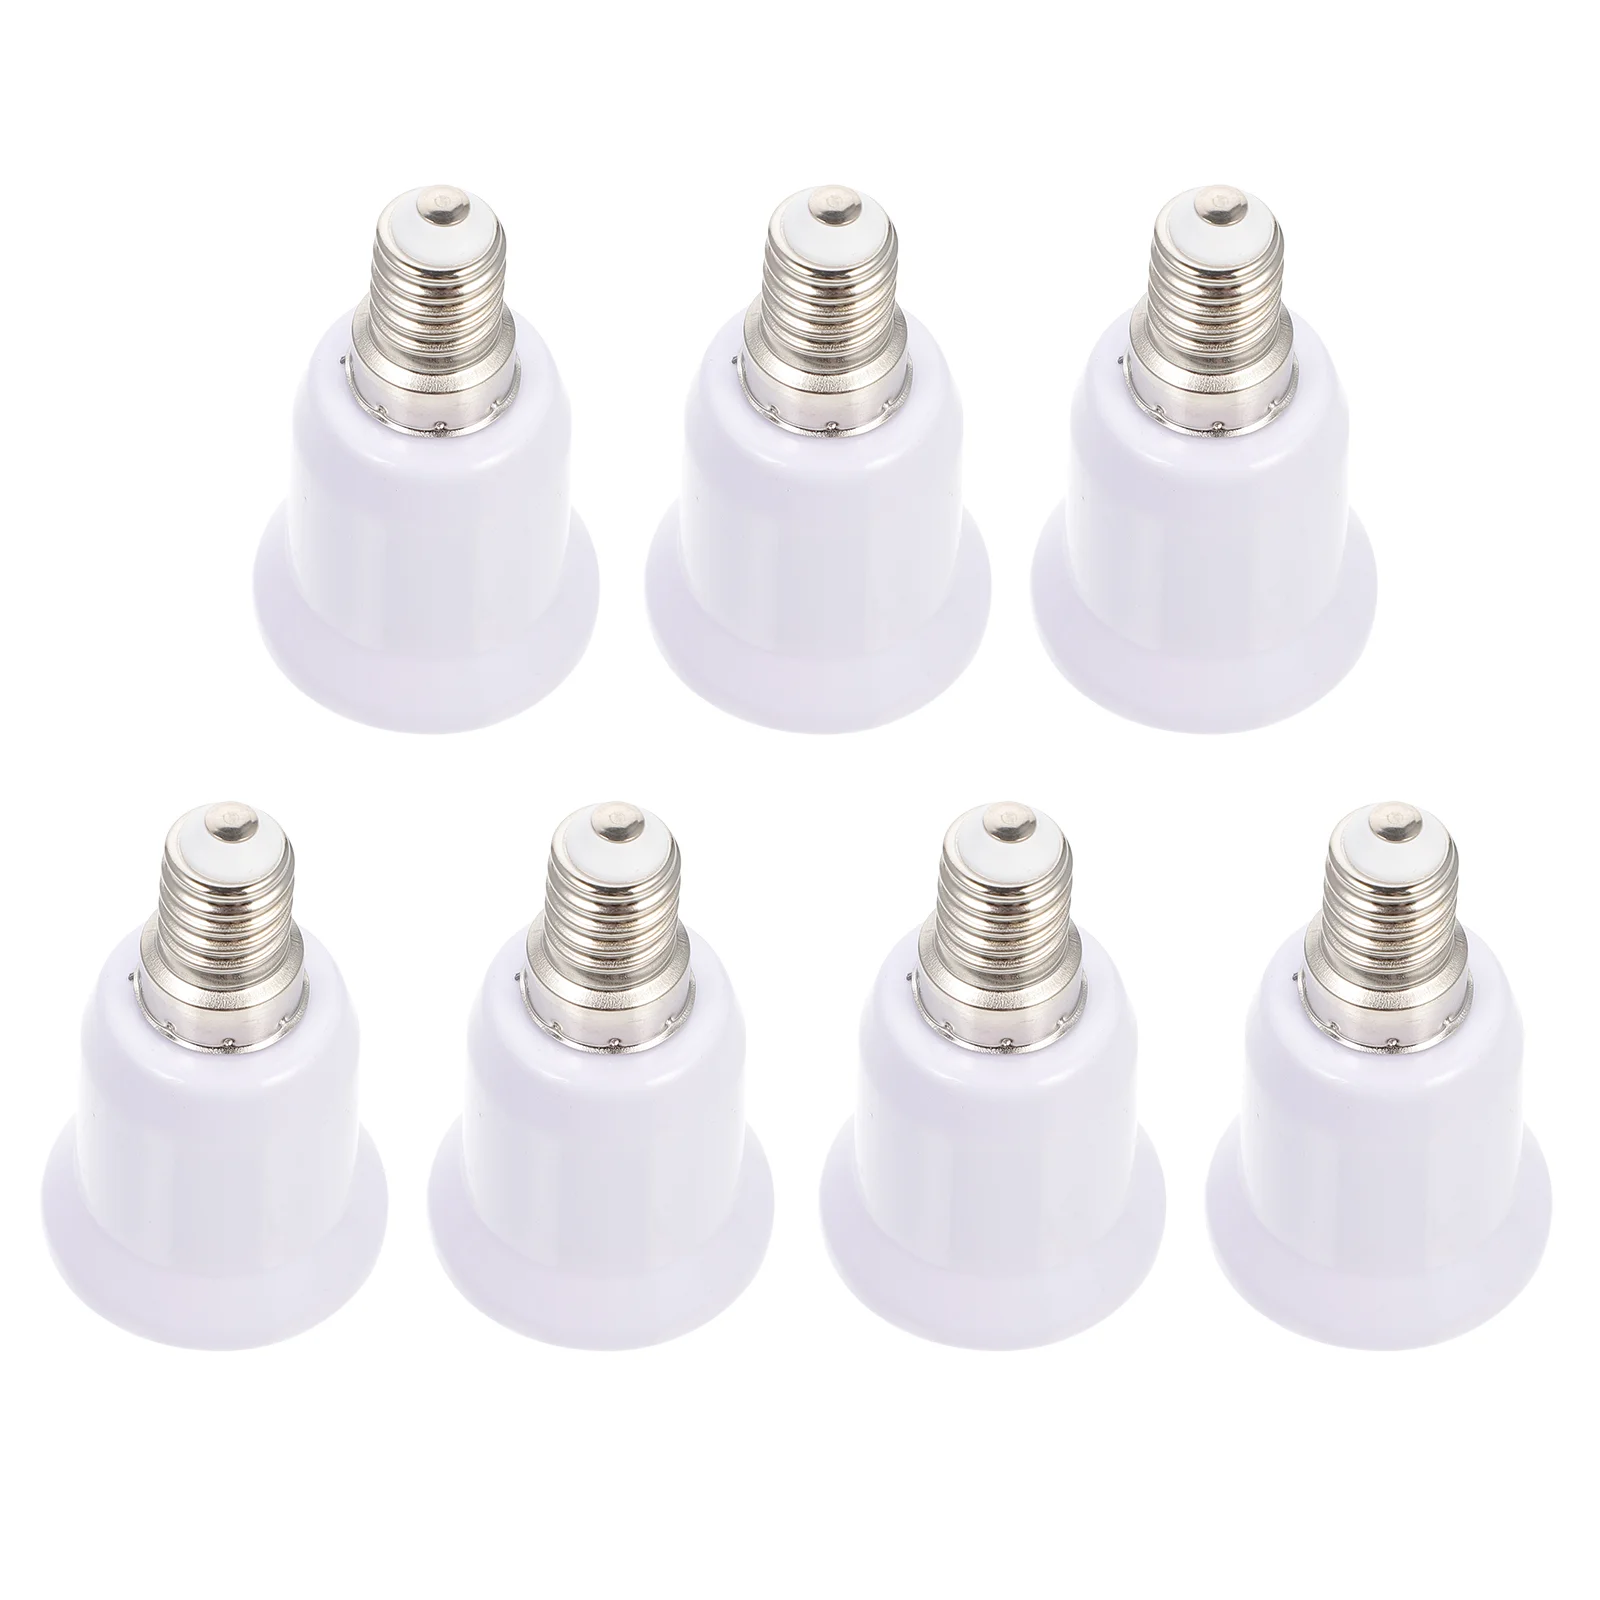 

7 Pcs Convert Lamp Head Chandelier Bulbs Adapter Converter Accessories Light Holder Plastic Converters E14 E27 LED Base